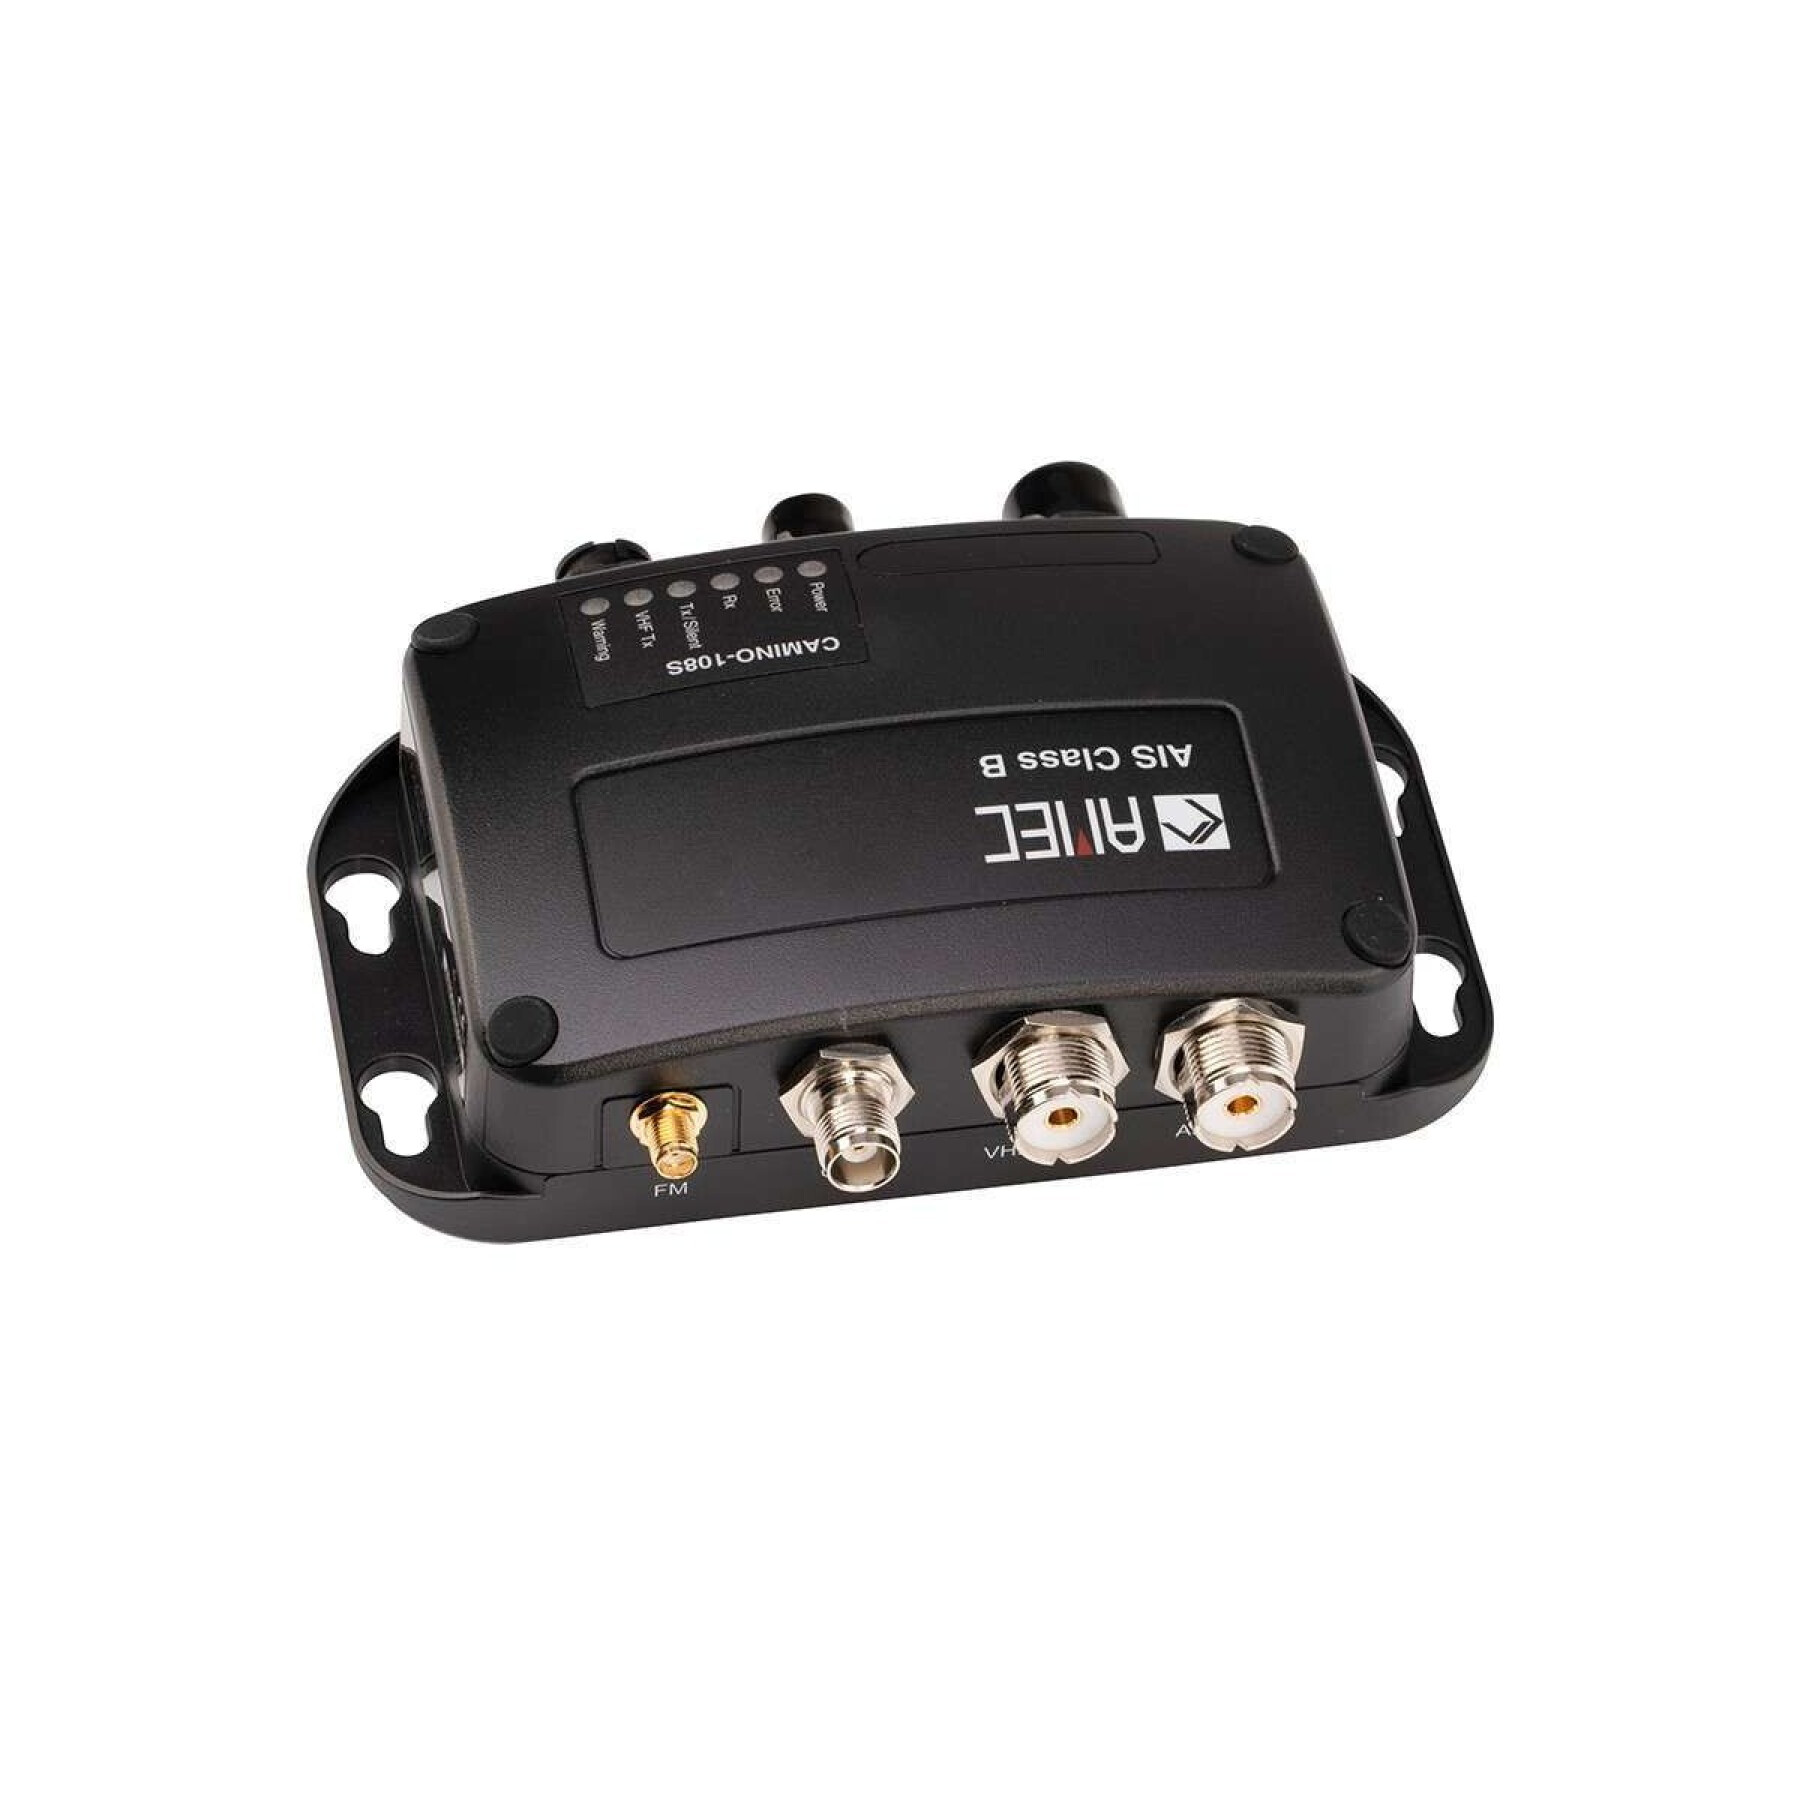 Transponder M.C Marine Camino-108S : AIS classe B USB-NMEA0183-N2K Splitter VHF